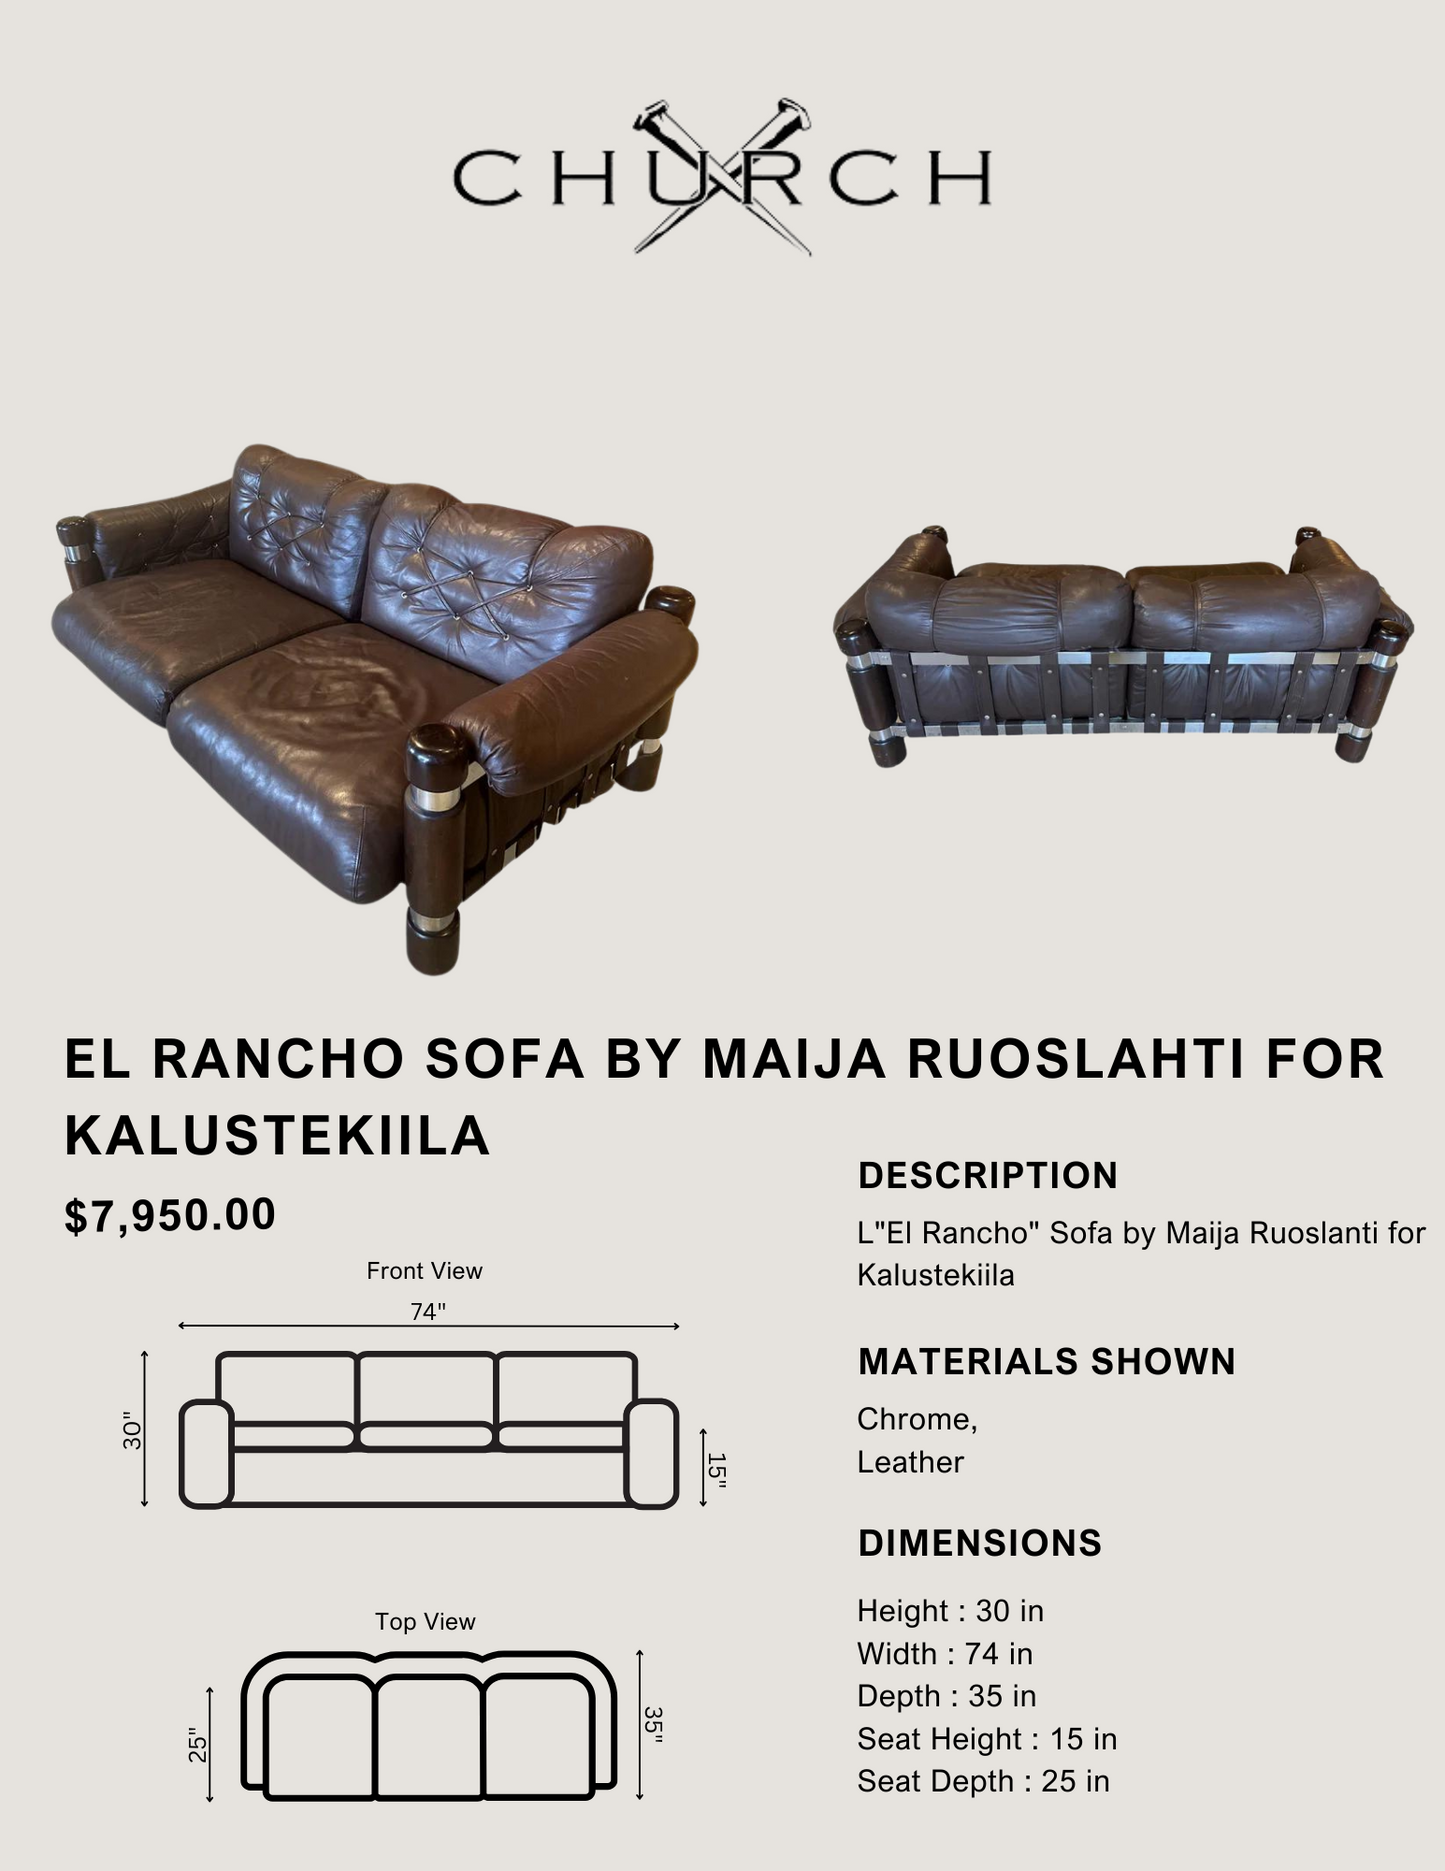 El Rancho Sofa by Maija Ruoslahti for Kalustekiila